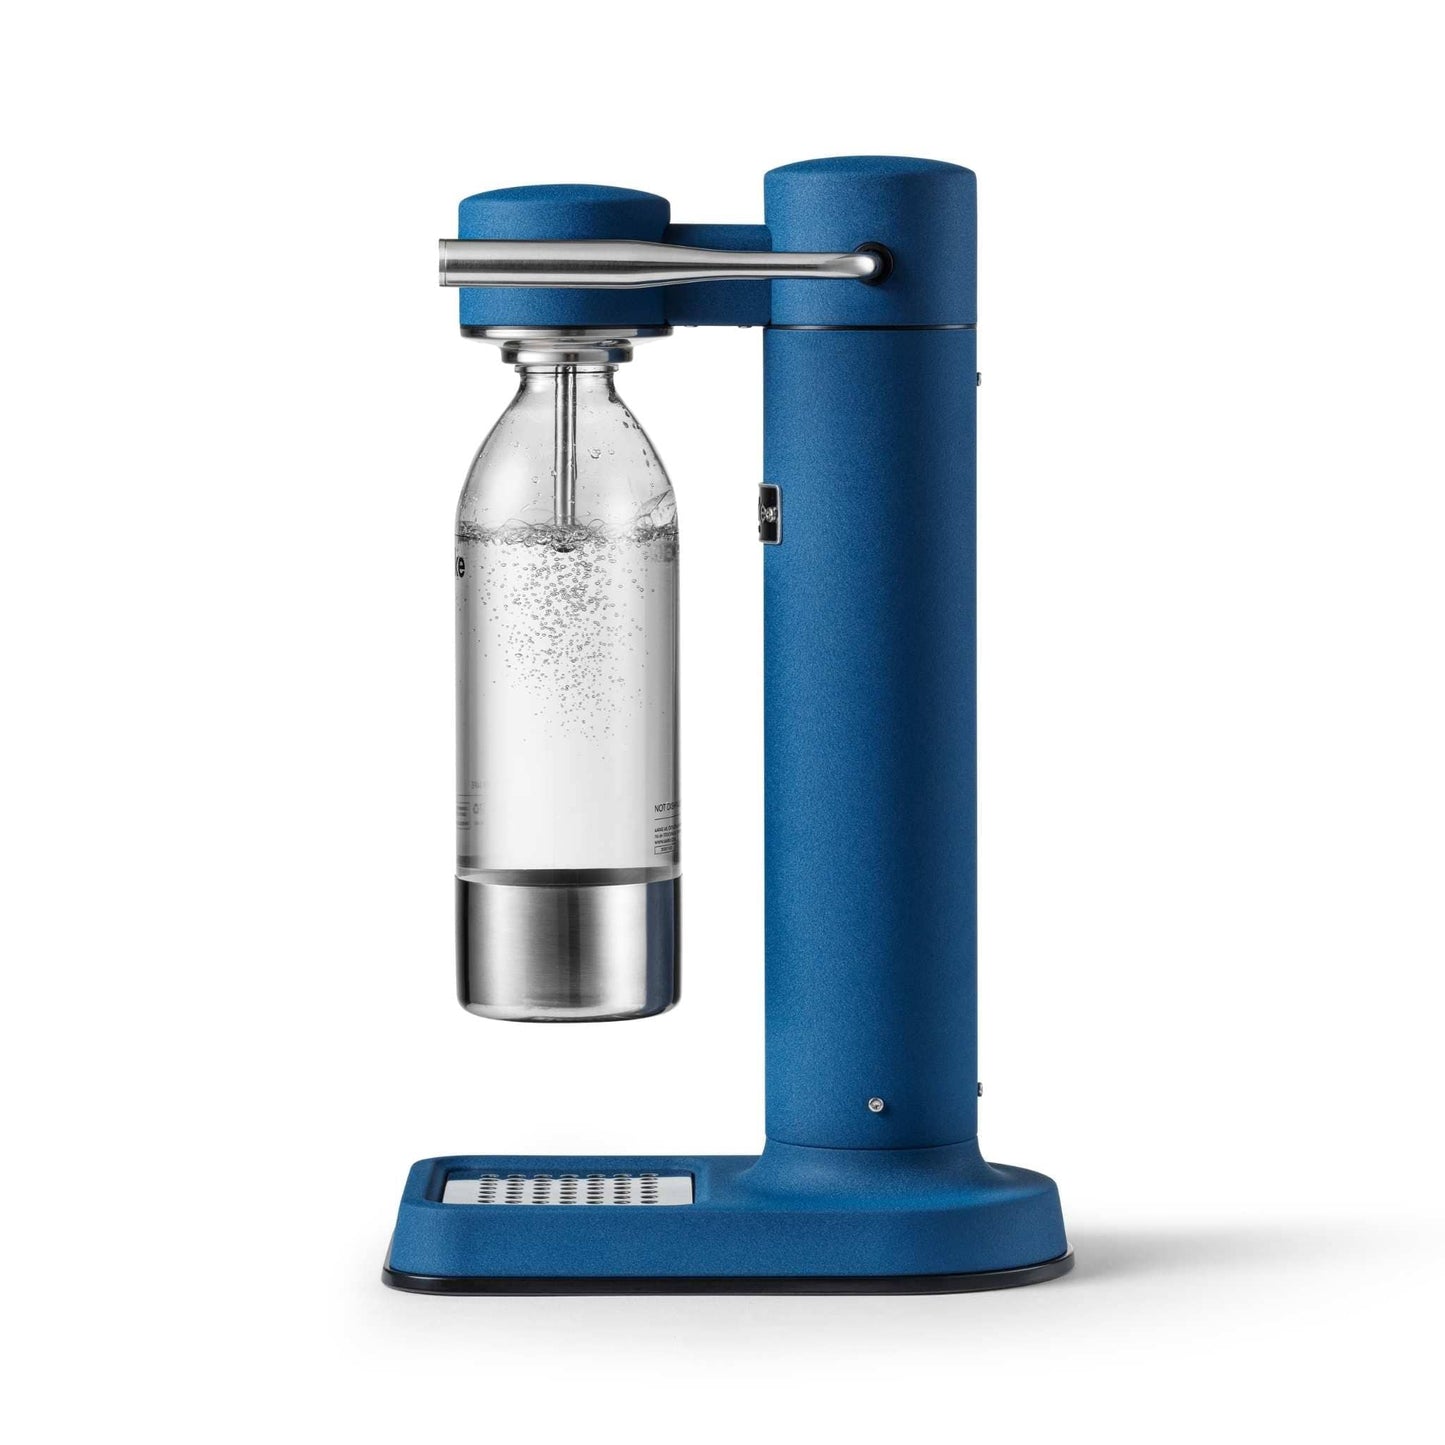 Load image into Gallery viewer, Aarke Soda Makers Aarke Sparkling Water Carbonator 3 - Cobalt Blue
